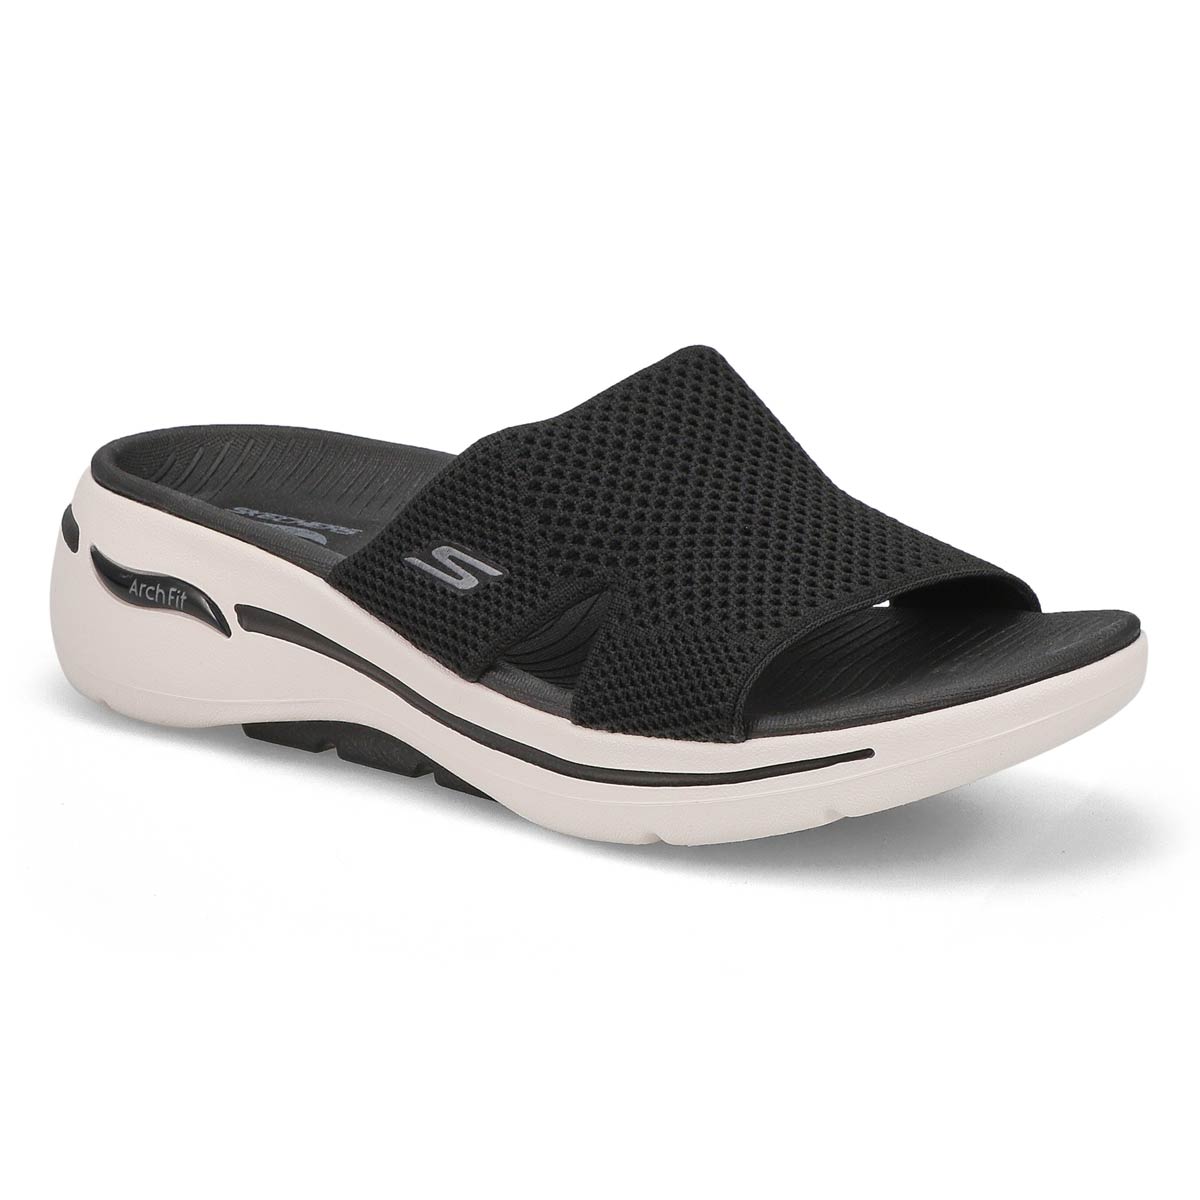 Skechers Lds Go Walk Arch Fit Slide Sandal-Bl | SoftMoc.com